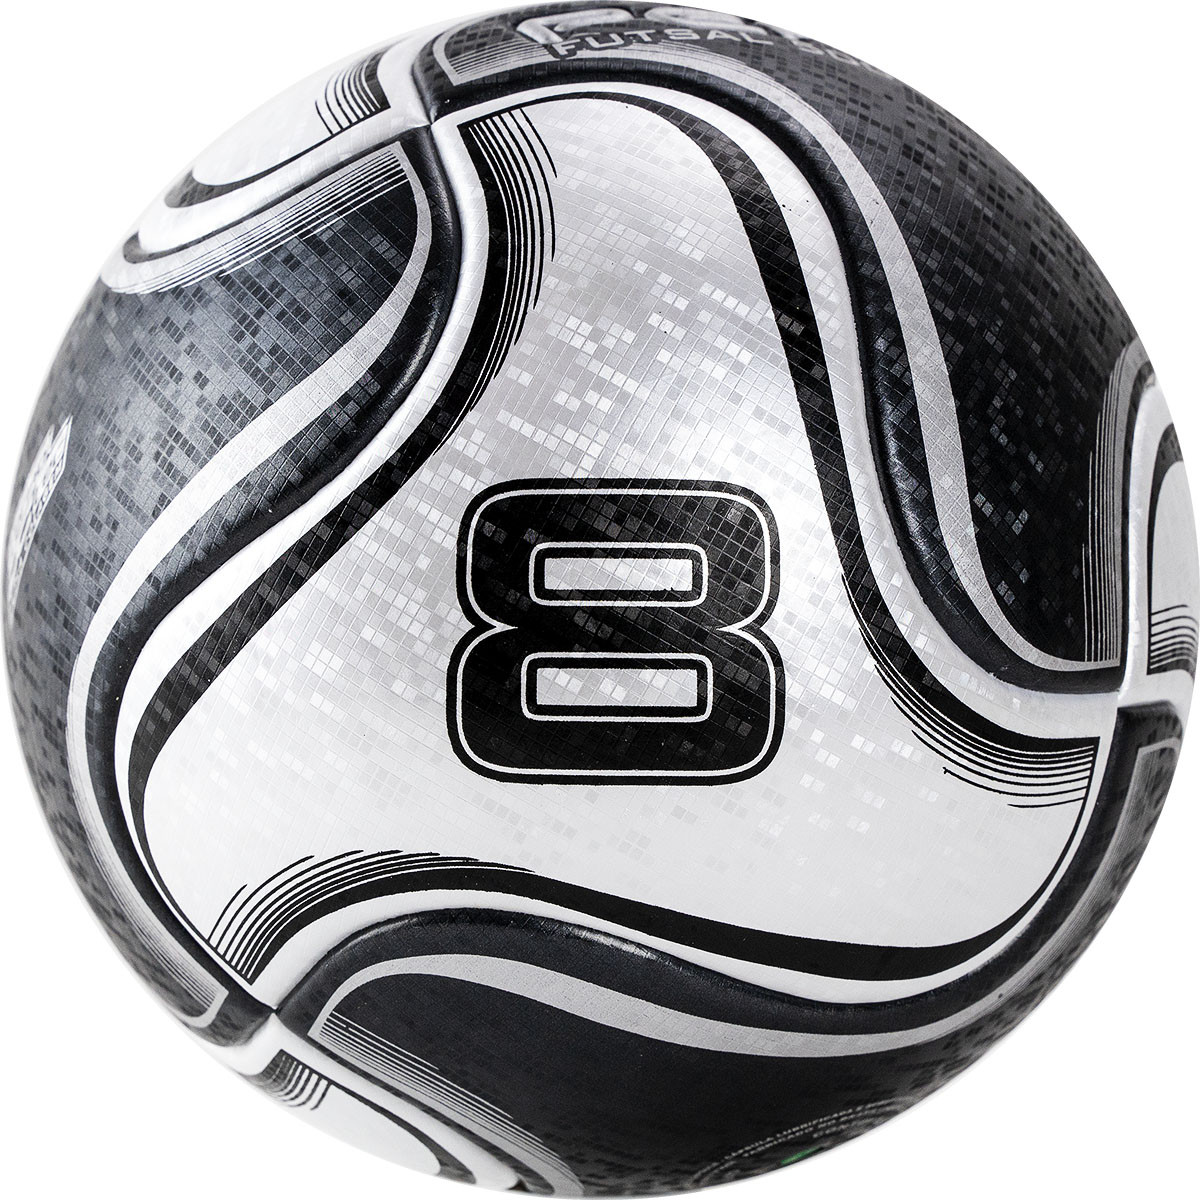 Мяч футзал. PENALTY BOLA FUTSAL 8 X, арт.5212861110-U, р.4, PU, термосшивка, черно-бел